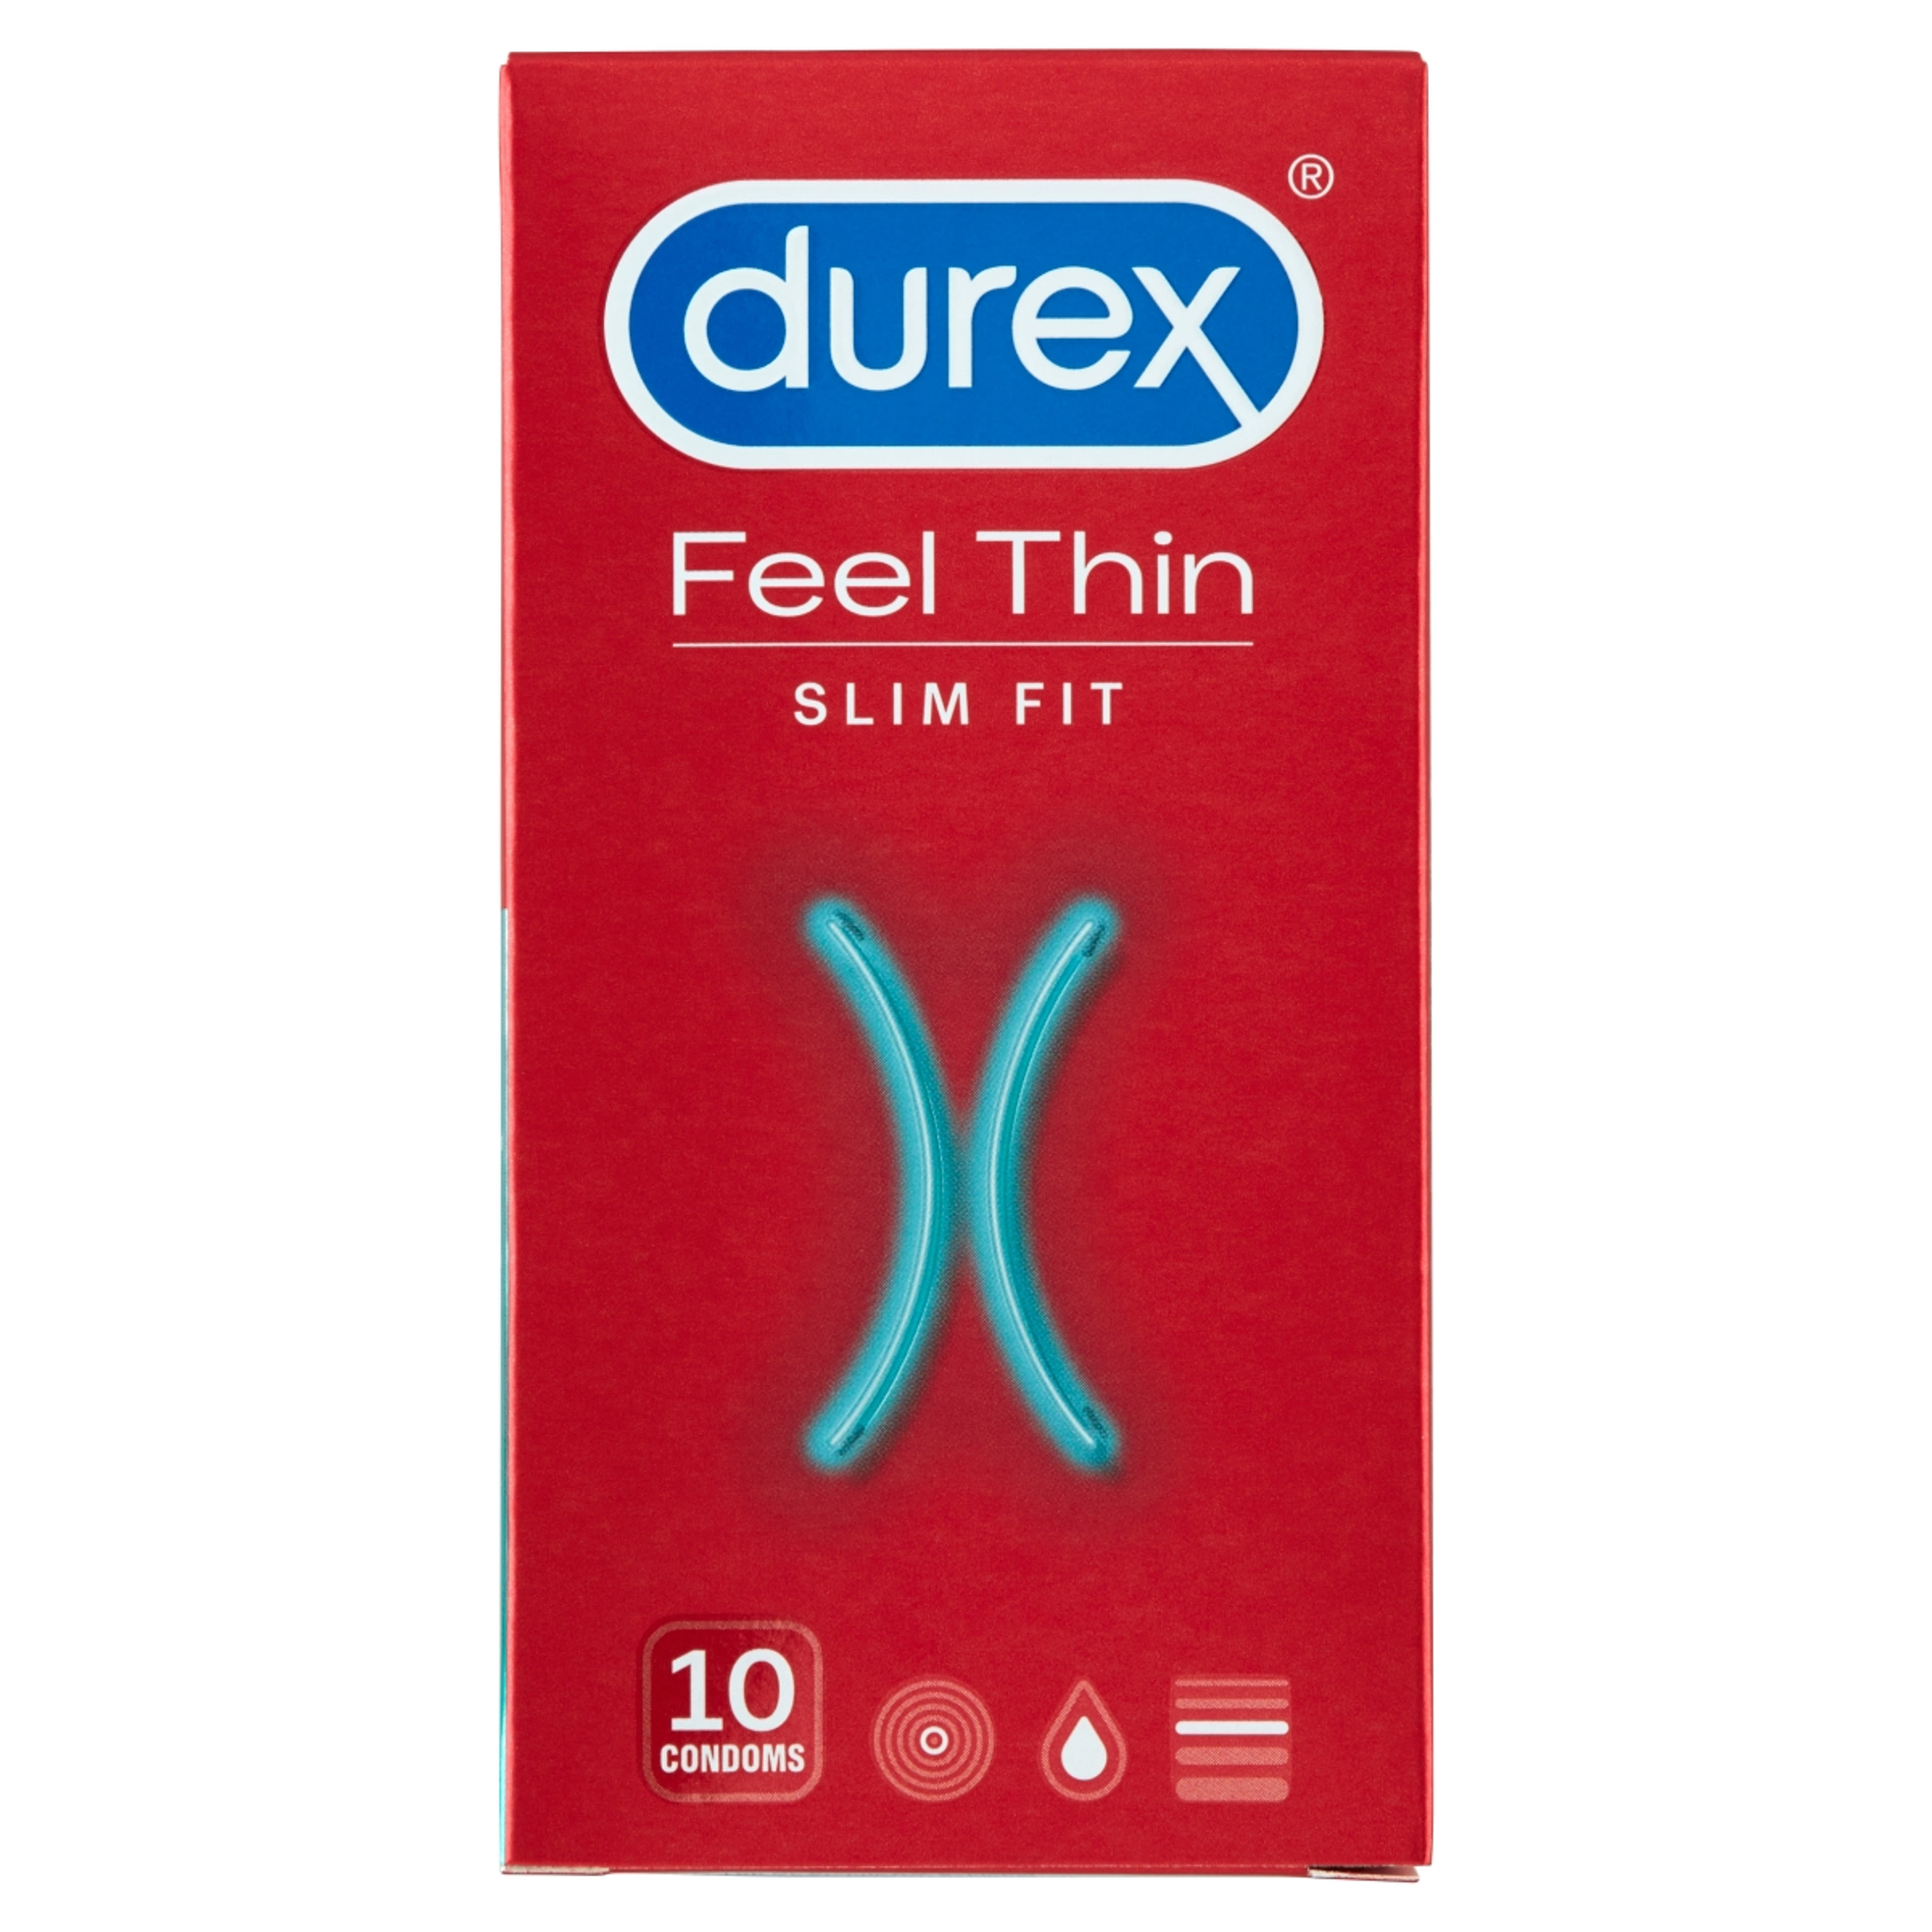 Durex óvszer feel thin slim fit - 10 db